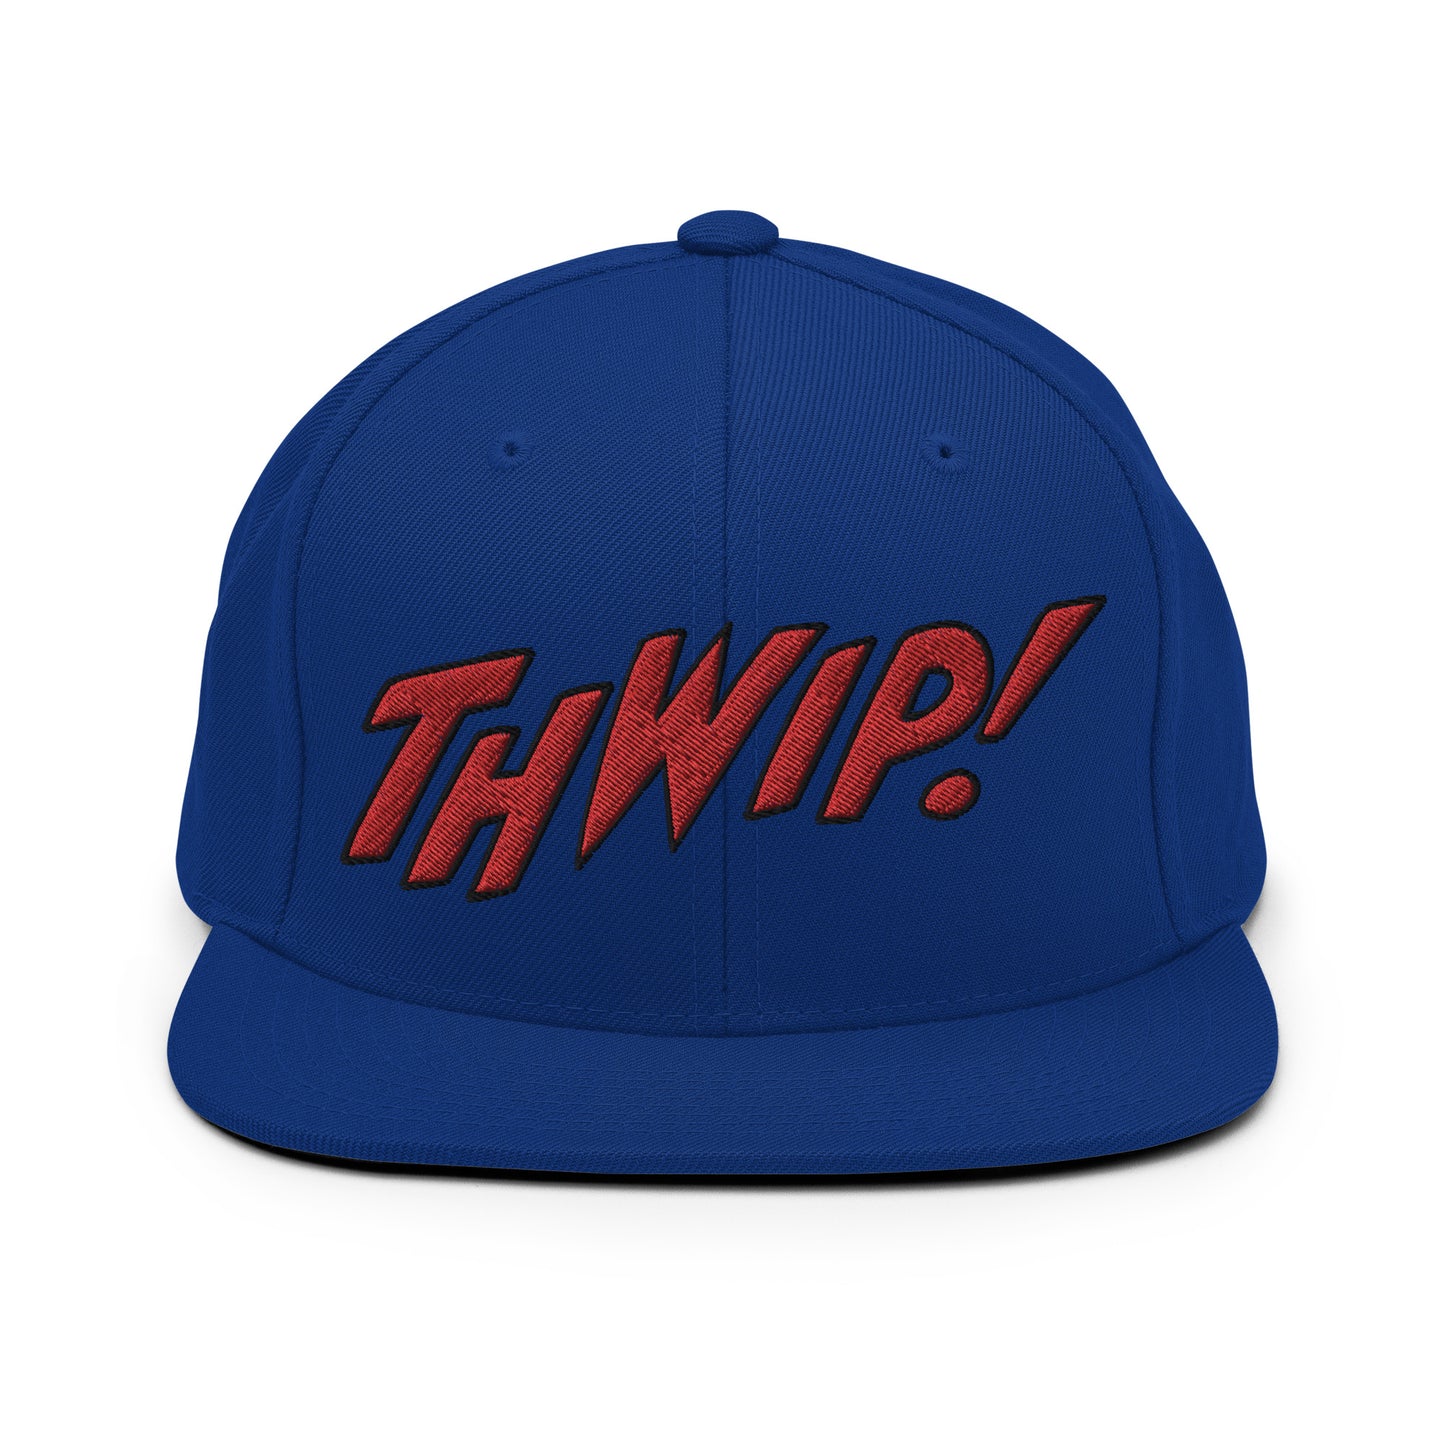 THWIP! snapback hat